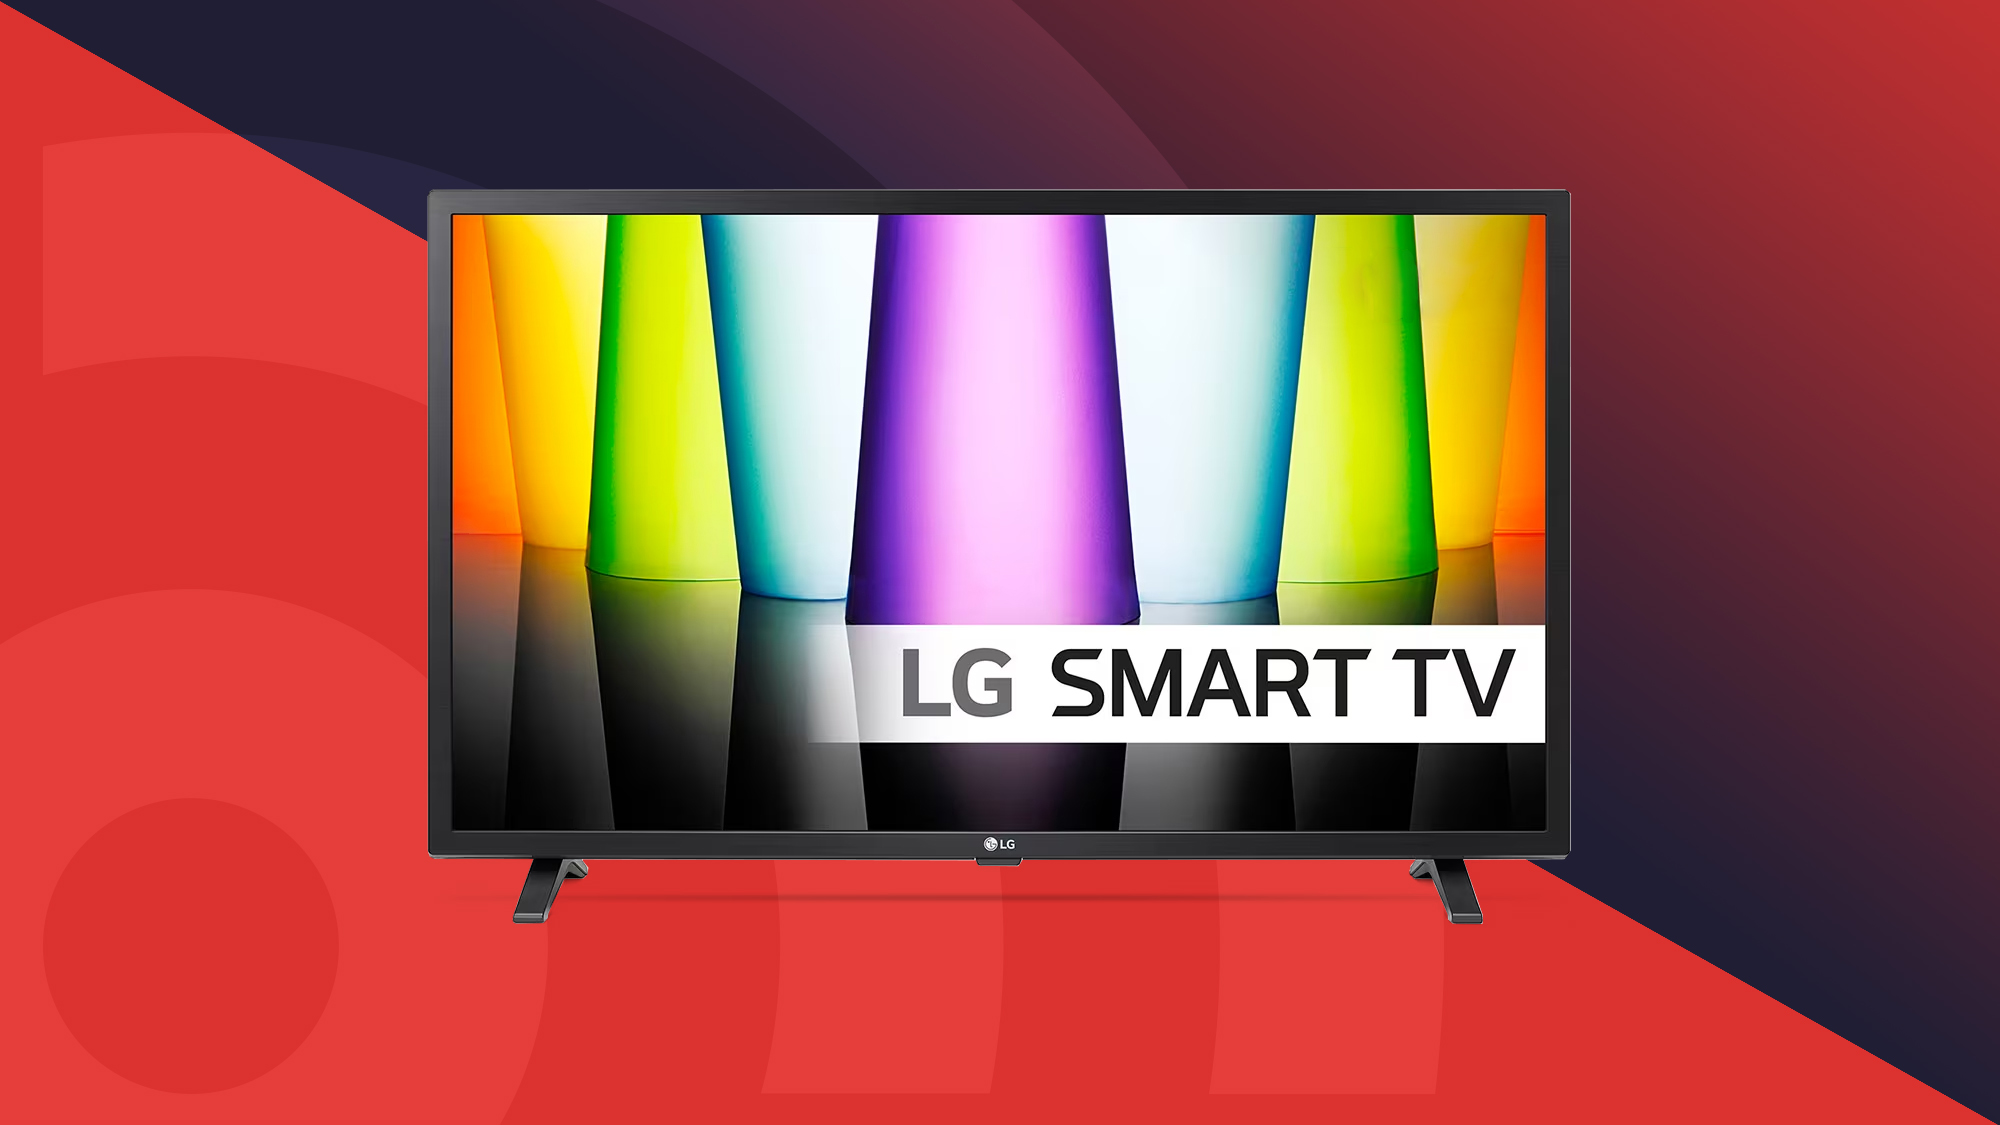  Lg 32 Inch Smart Tv